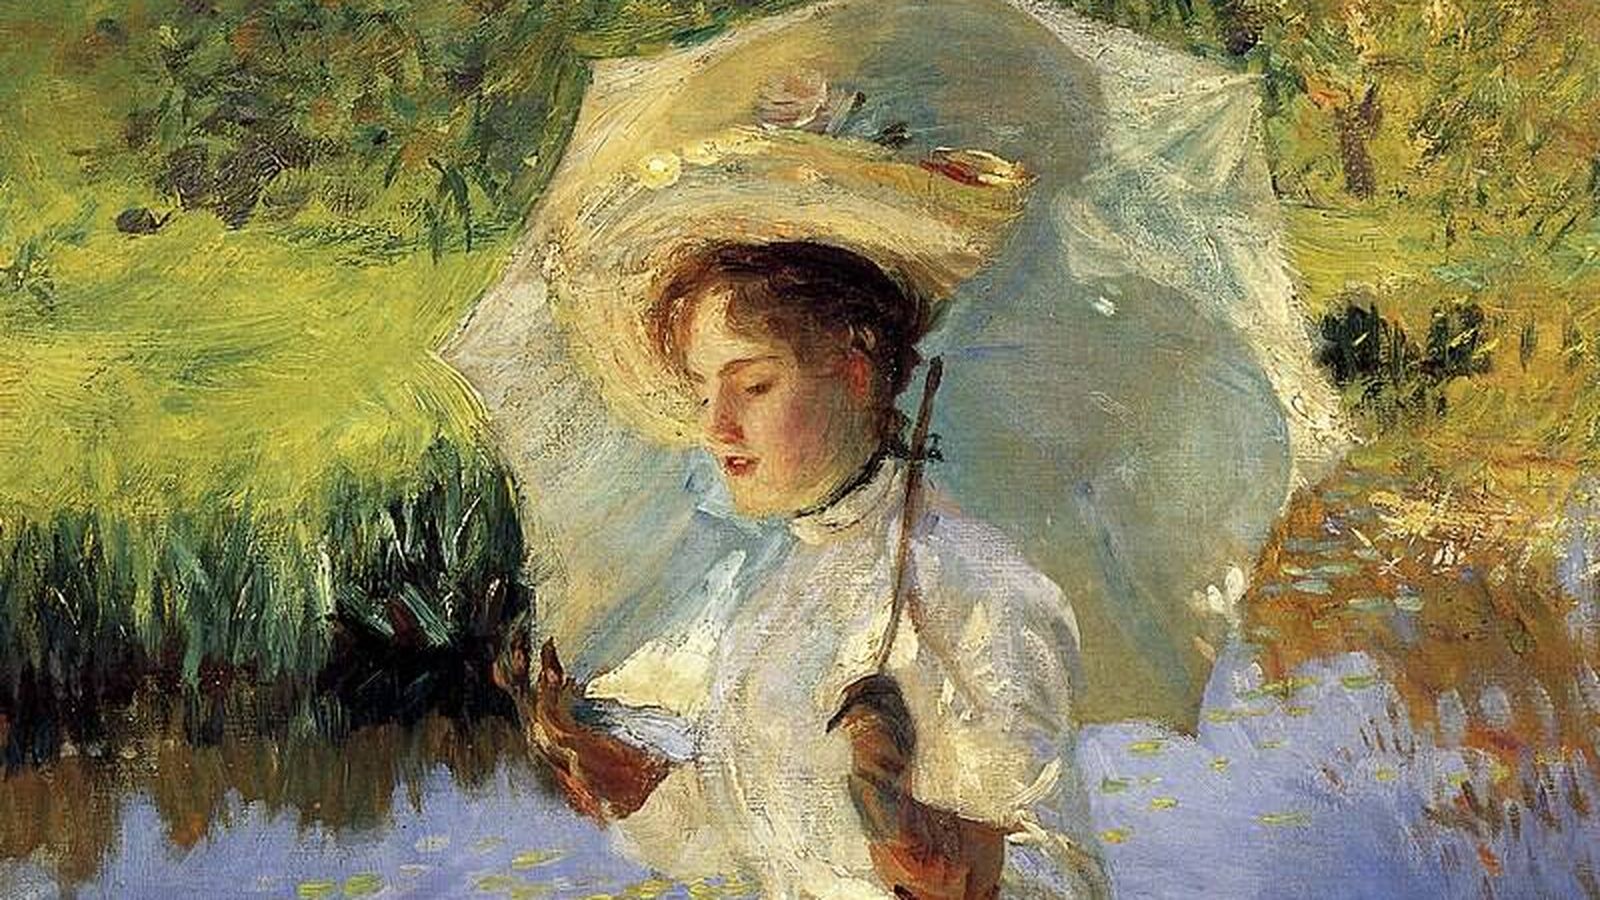 Paraguas representado en 'Morning Walk', de John Singer Sargent (1888). Fuente: Wikipedia.